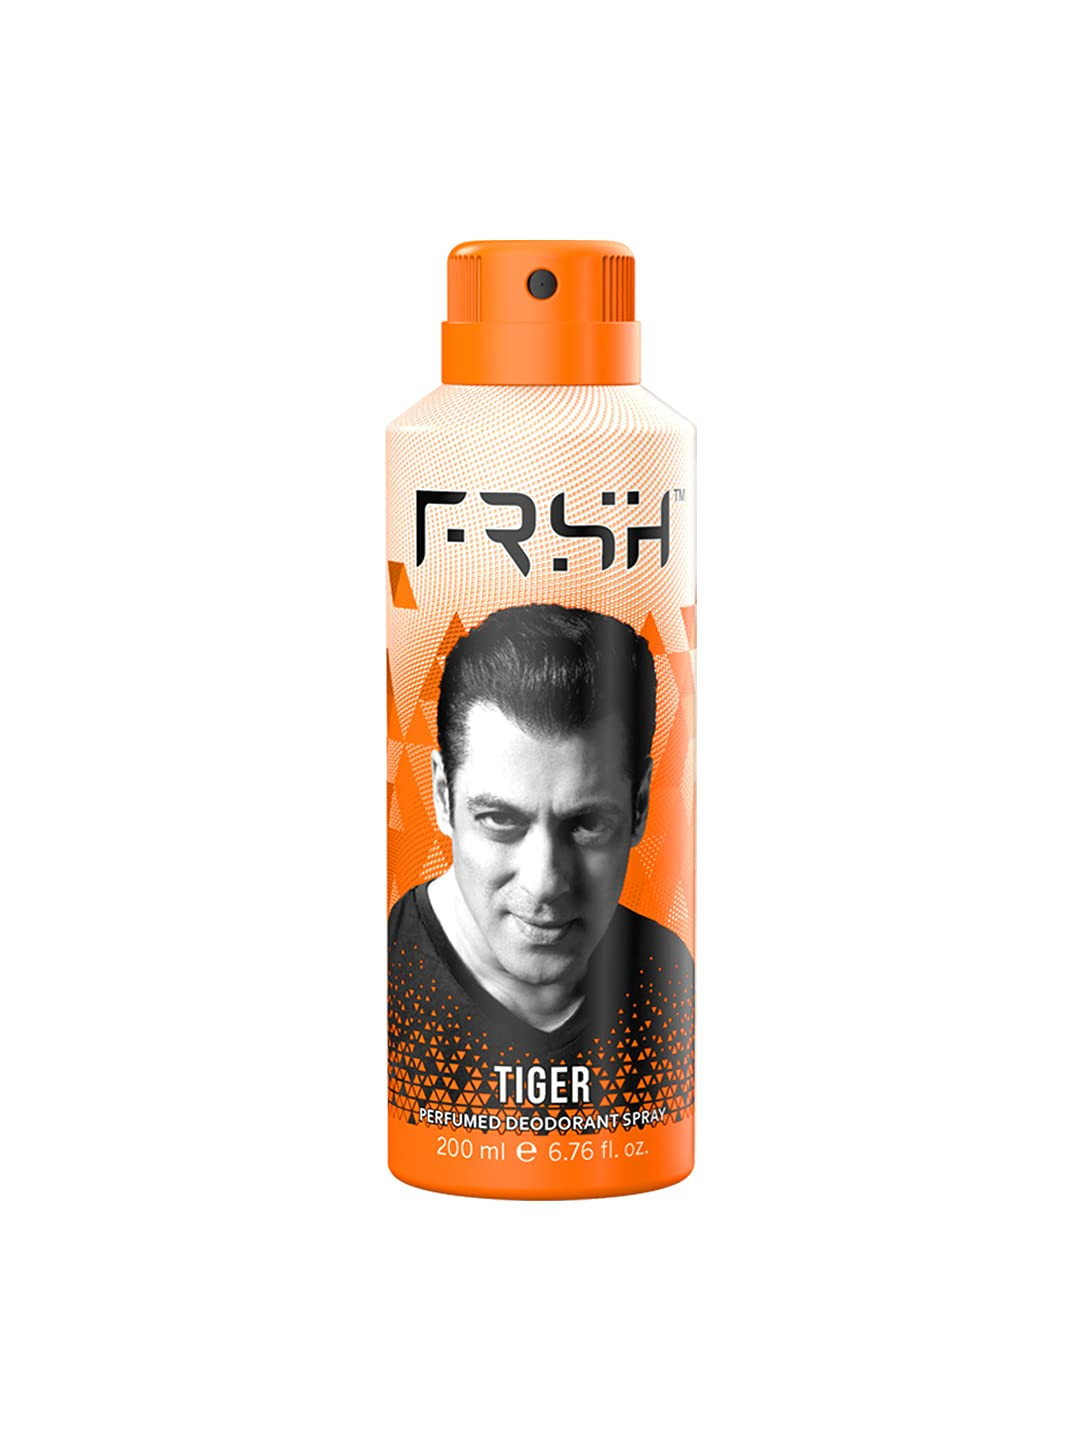 Frsh Deodorant Body Spray For Men (Tiger)